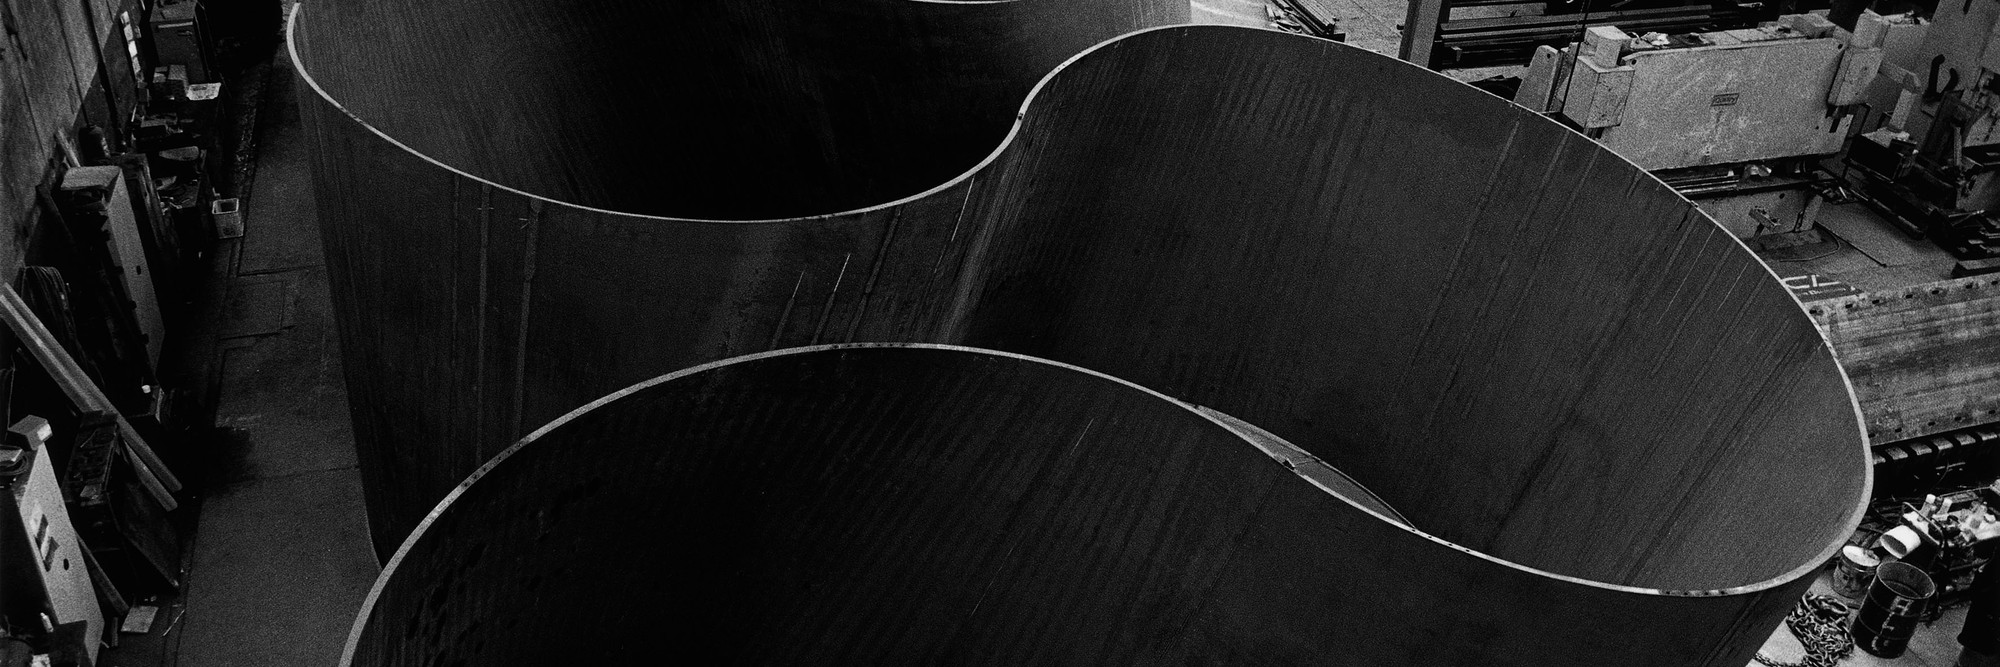 Richard Serra (American, born 1938). Band. 2006. Weatherproof steel. Los Angeles County Museum of Art. Gift of Eli and Edythe Broad